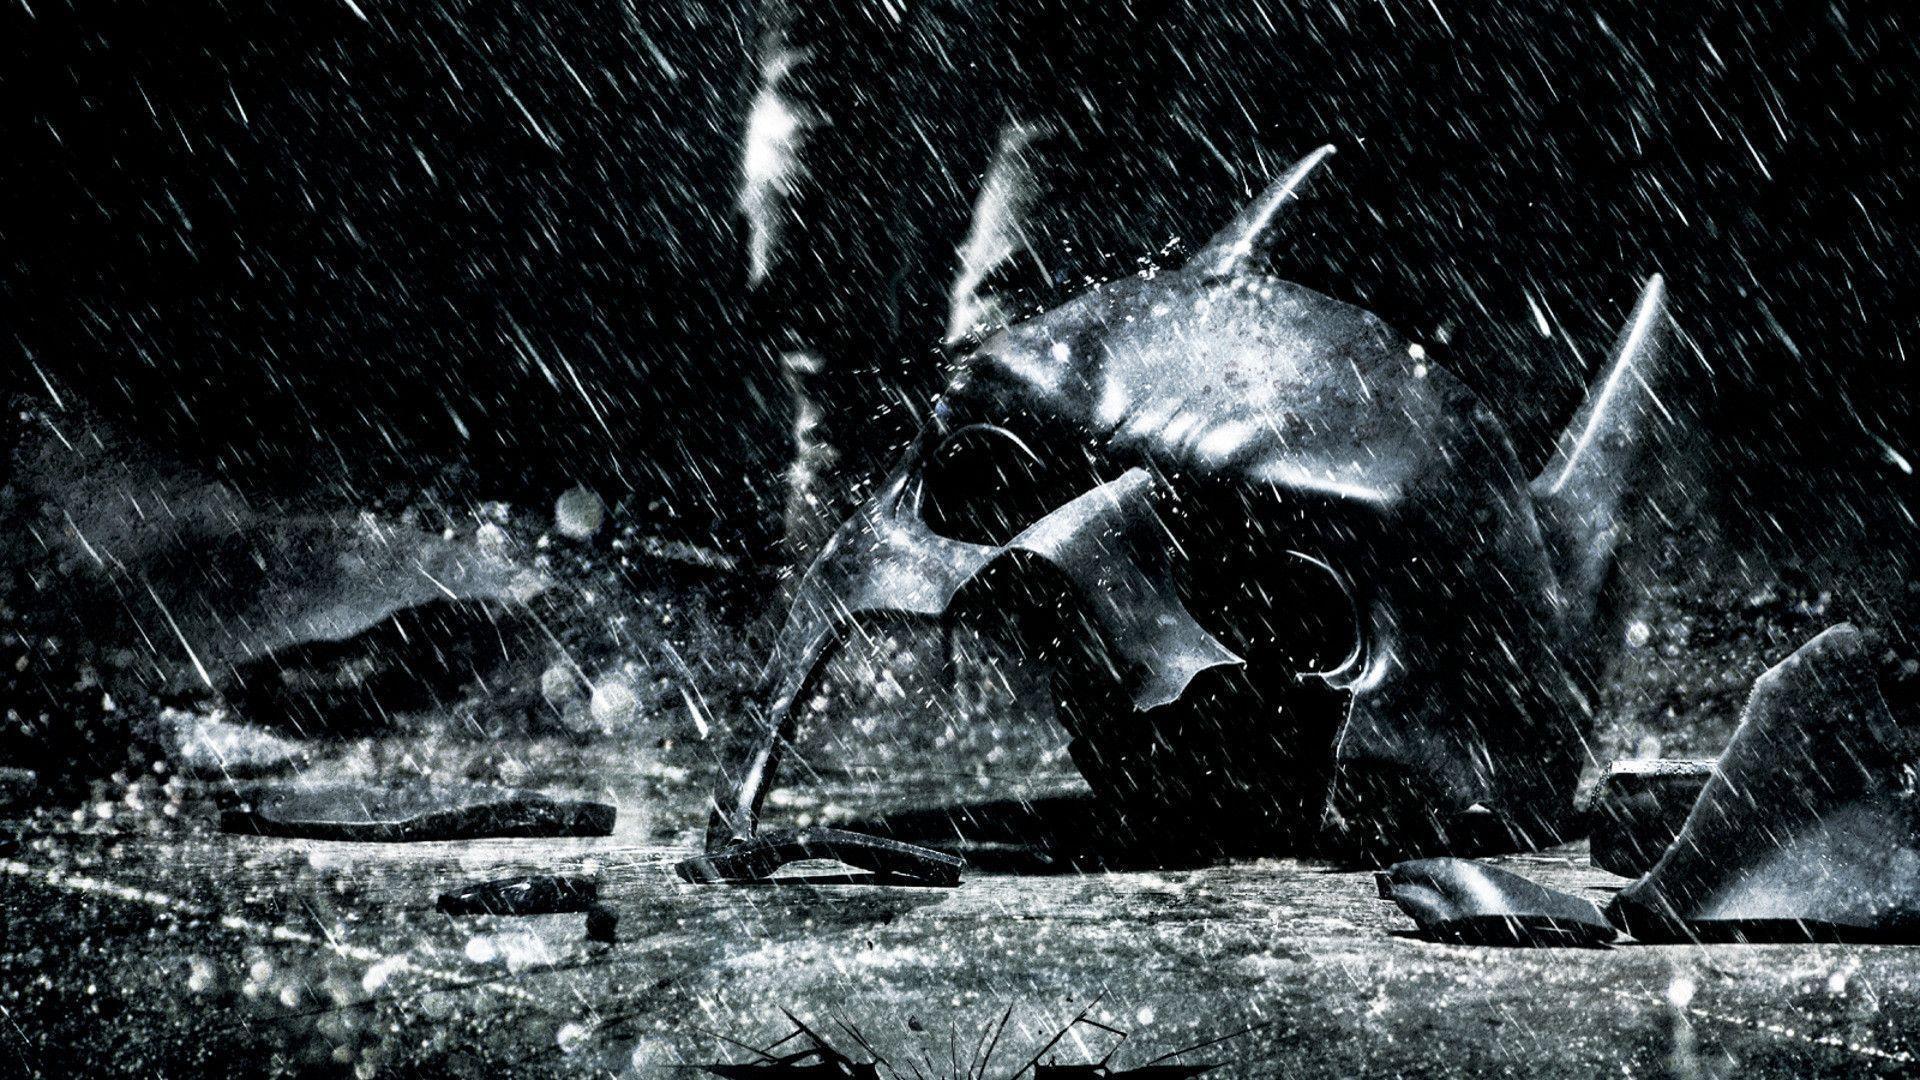 Batman, The Dark Knight Rises Movie Wallpaper Collections